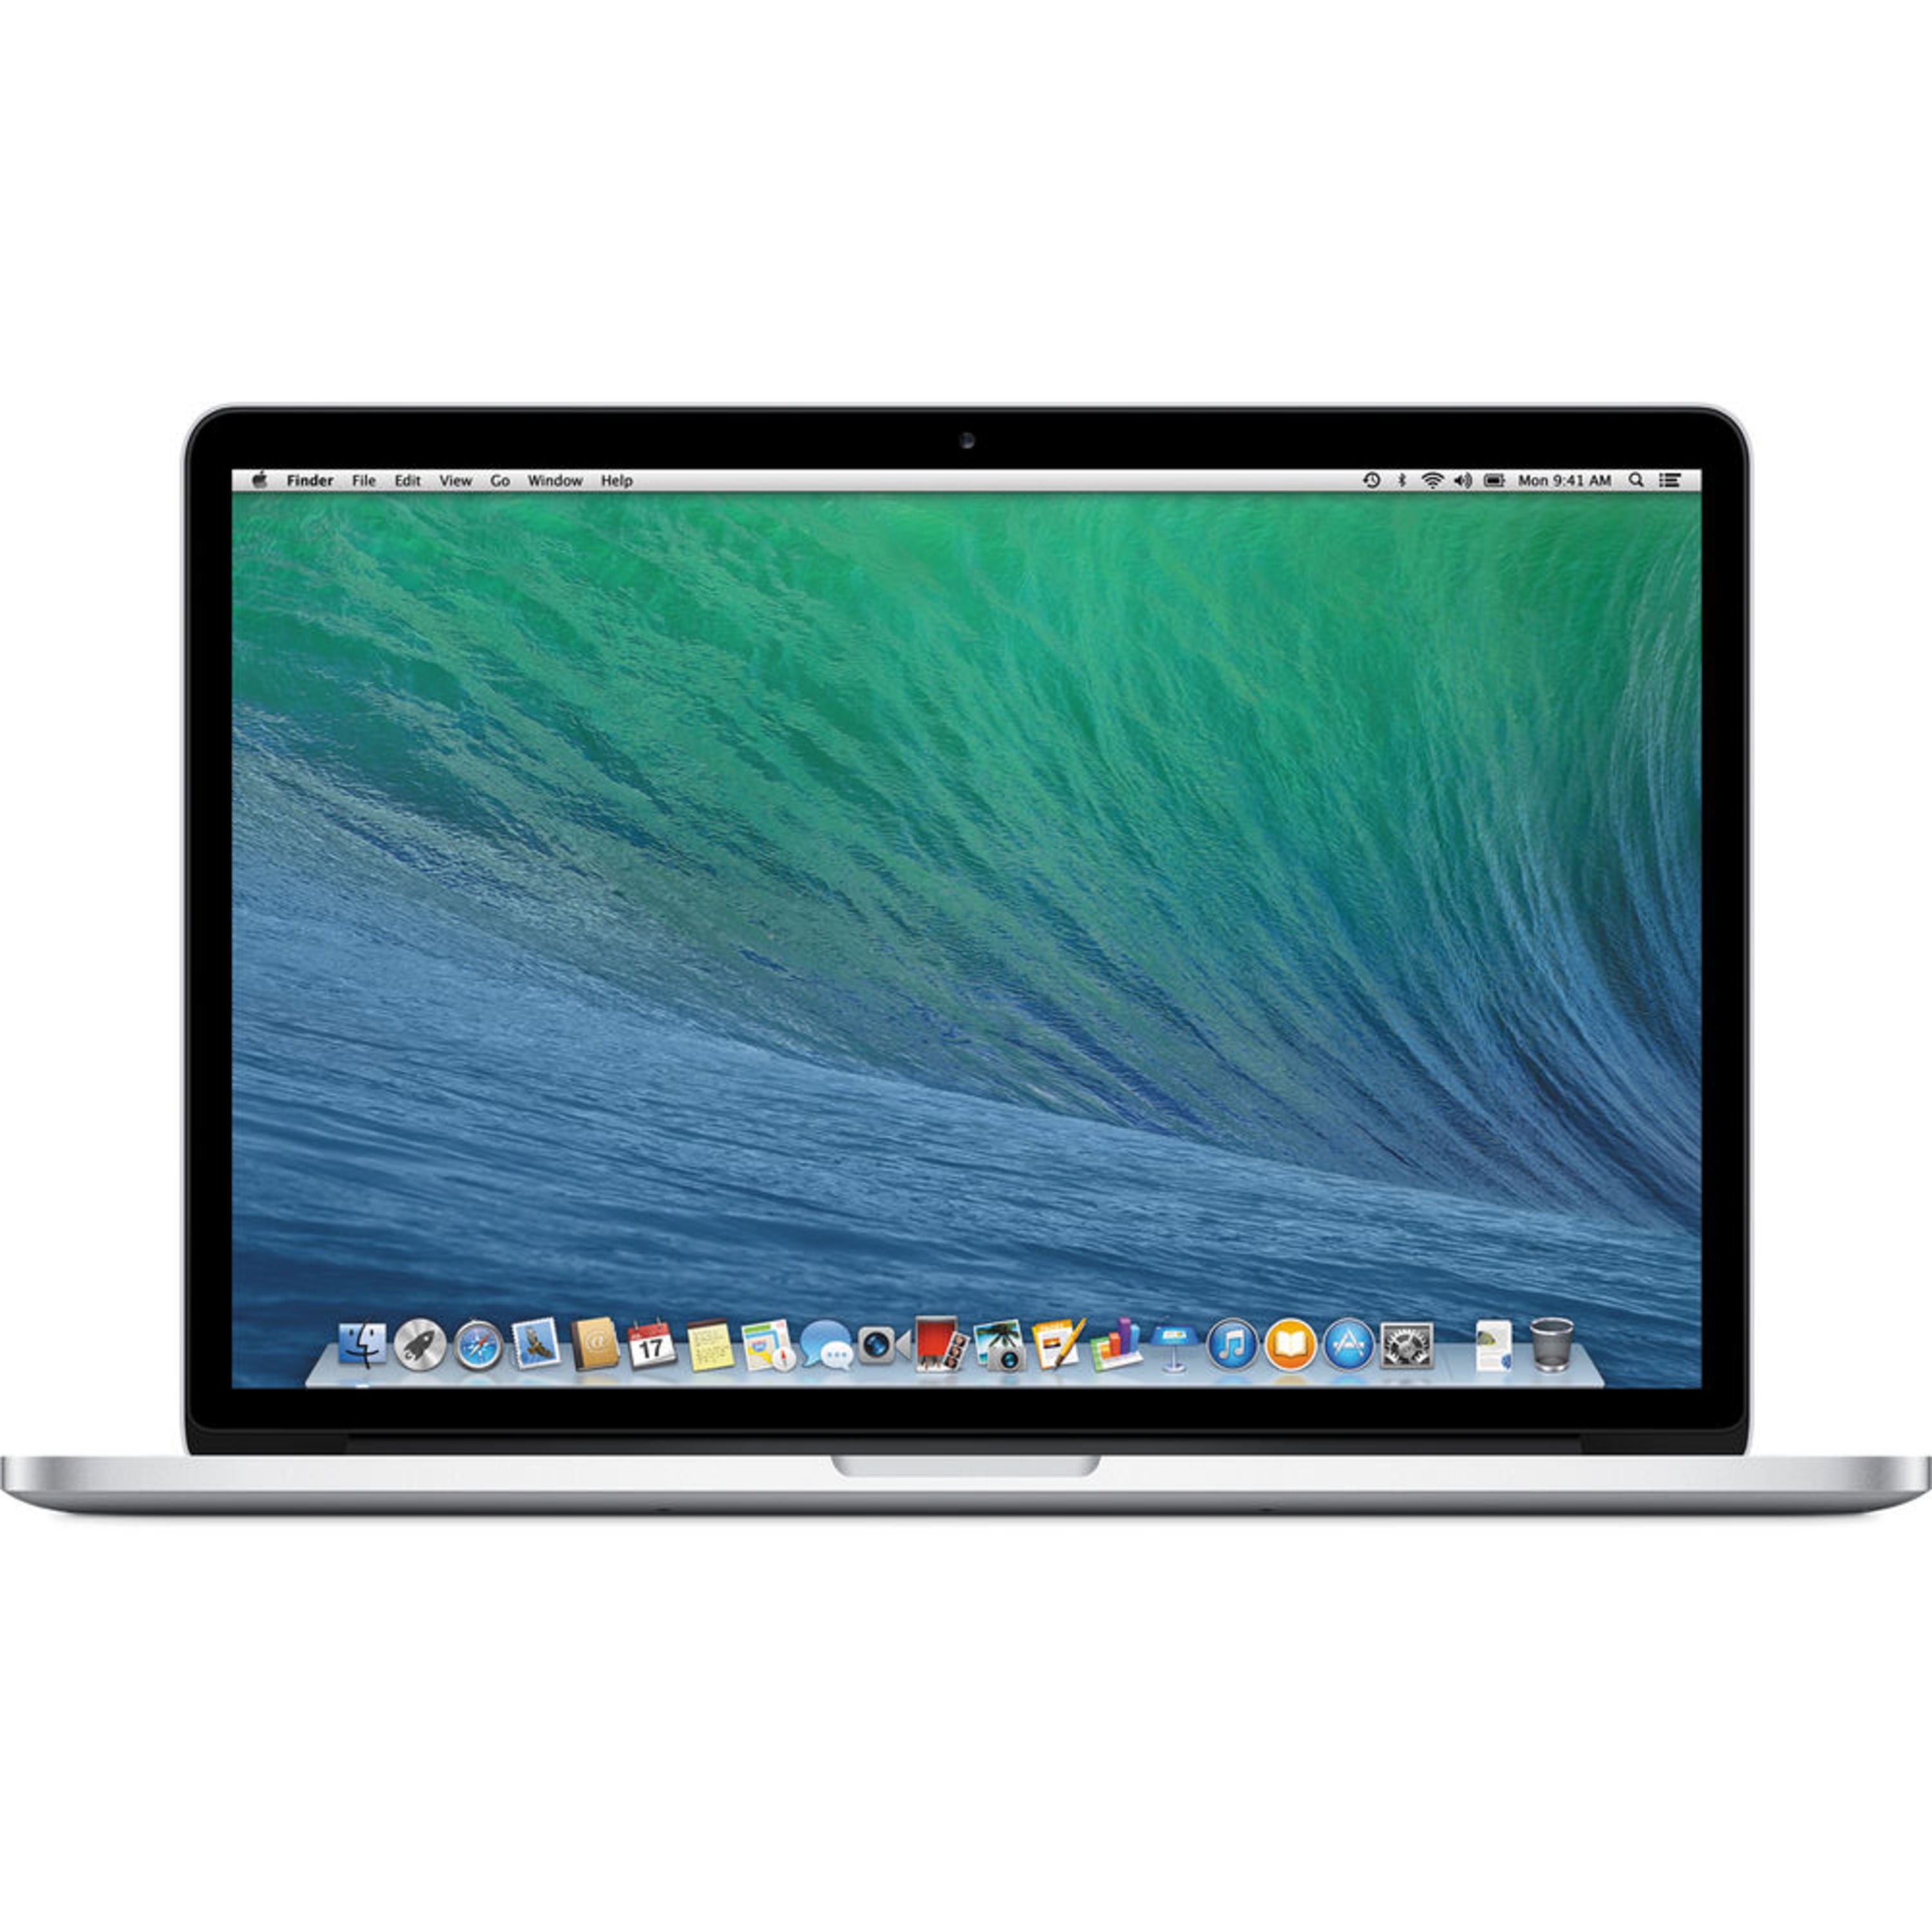 udarbejde fly Delegeret Apple MacBook Pro Laptop, 15.4", Intel Core i7-4750HQ, 8GB RAM,256GB SSD,  Mac OS X, Silver, ME293LL/A (Certified Refurbished) - Walmart.com